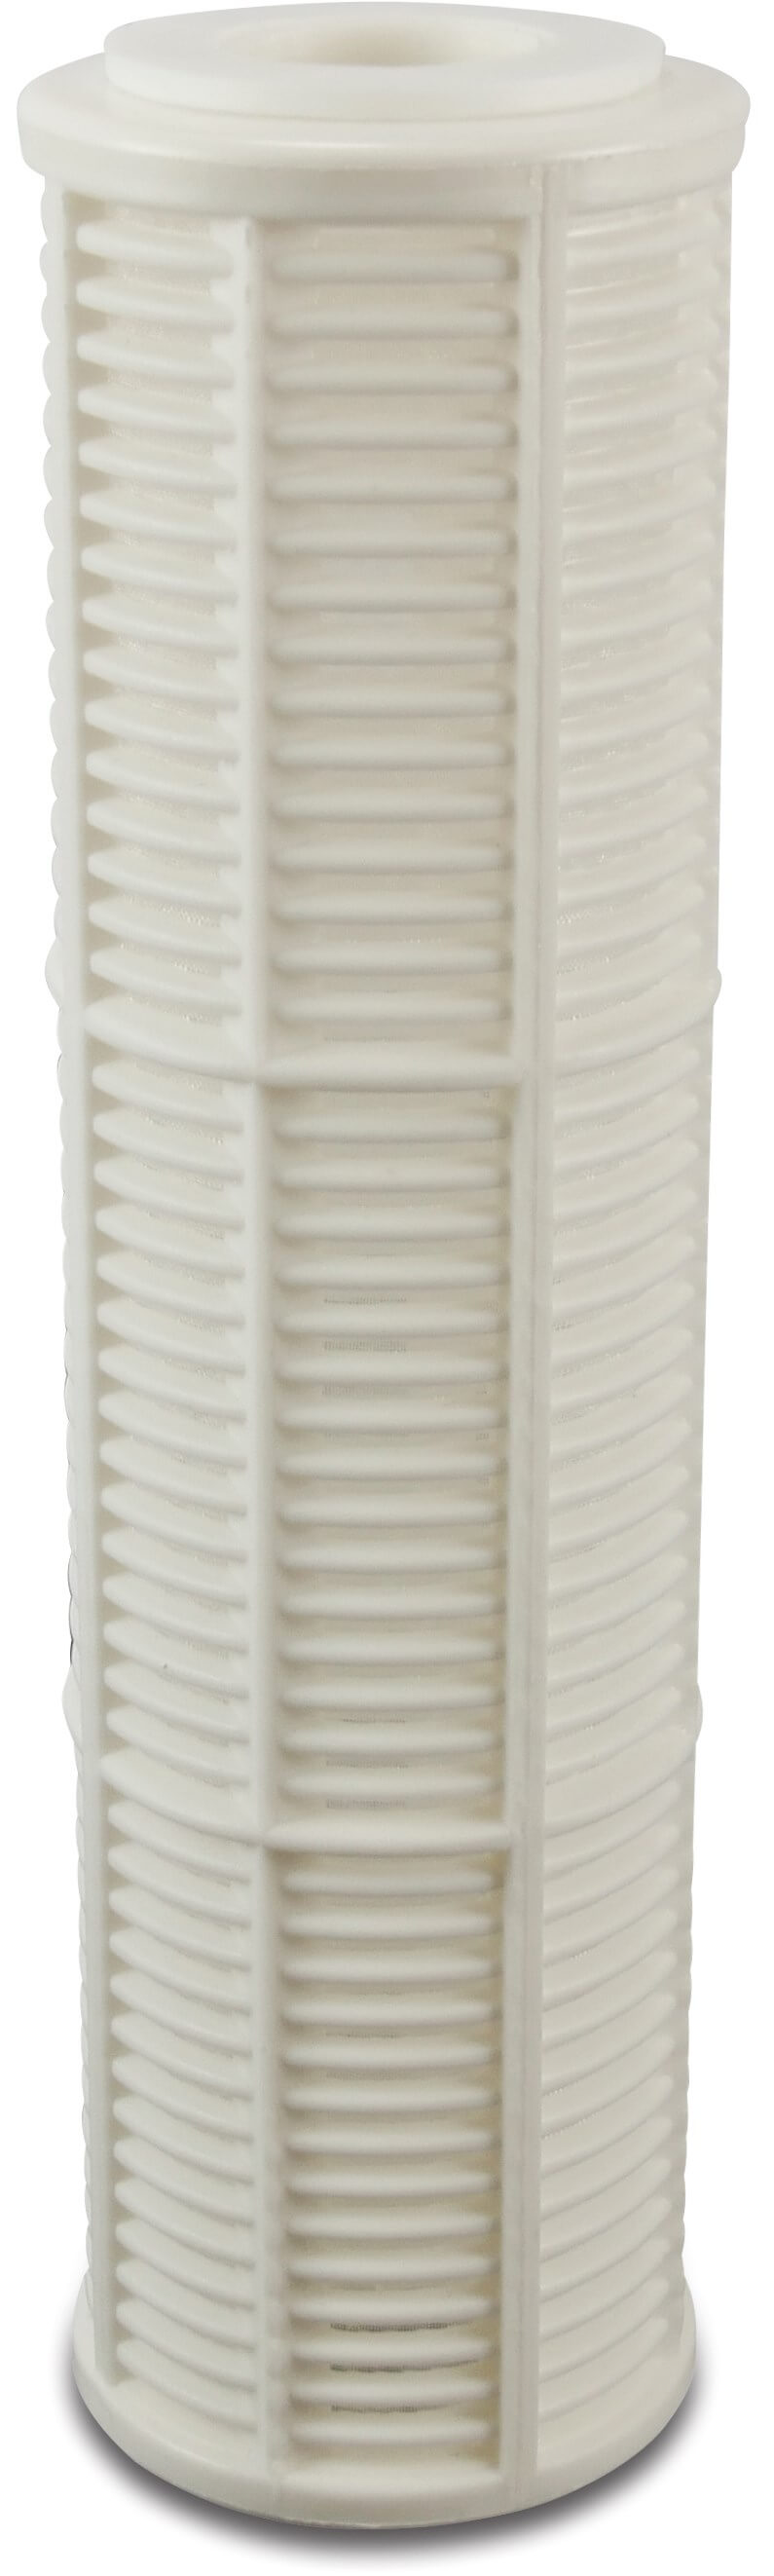 Profec Filter cartridge nylon 60micron polyester gauze type 10" filter